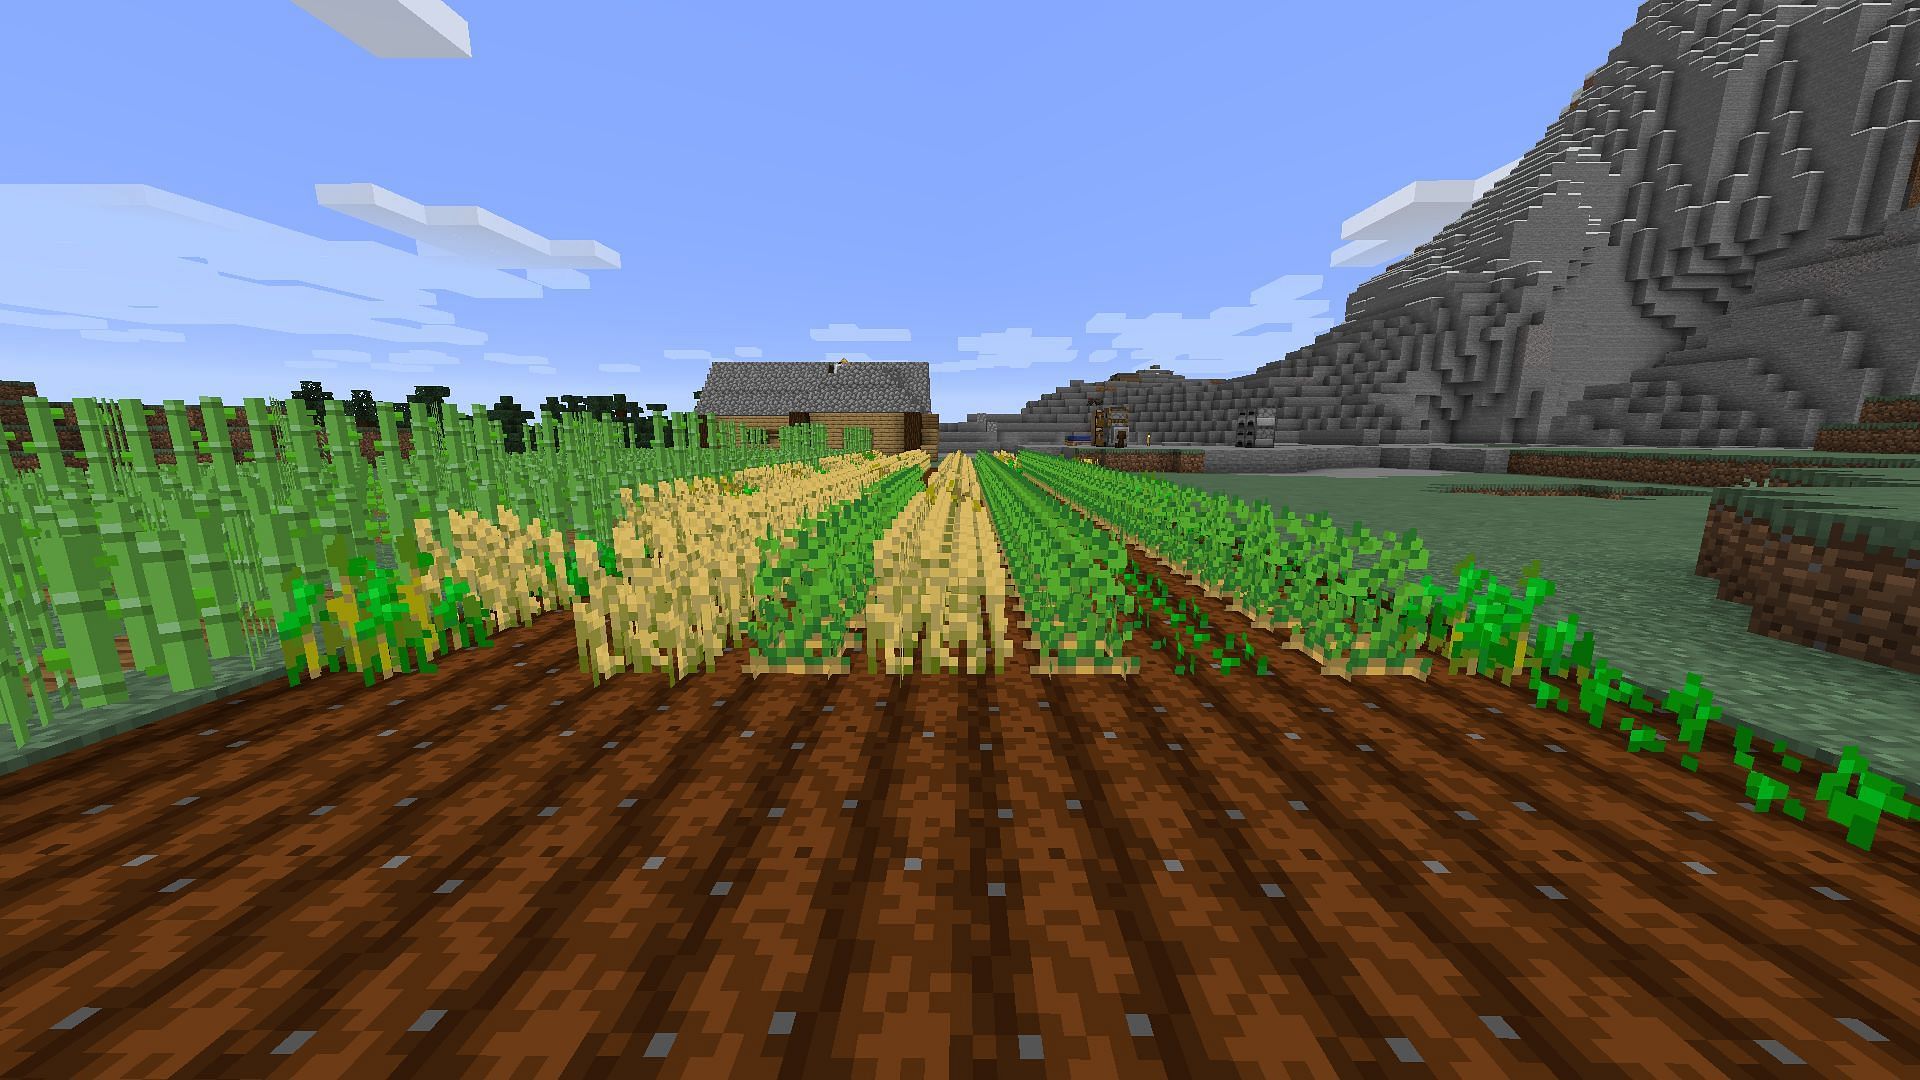 Placing crops in rows speeds their overall growth (Image via u/TheKingBuckeye/Reddit)